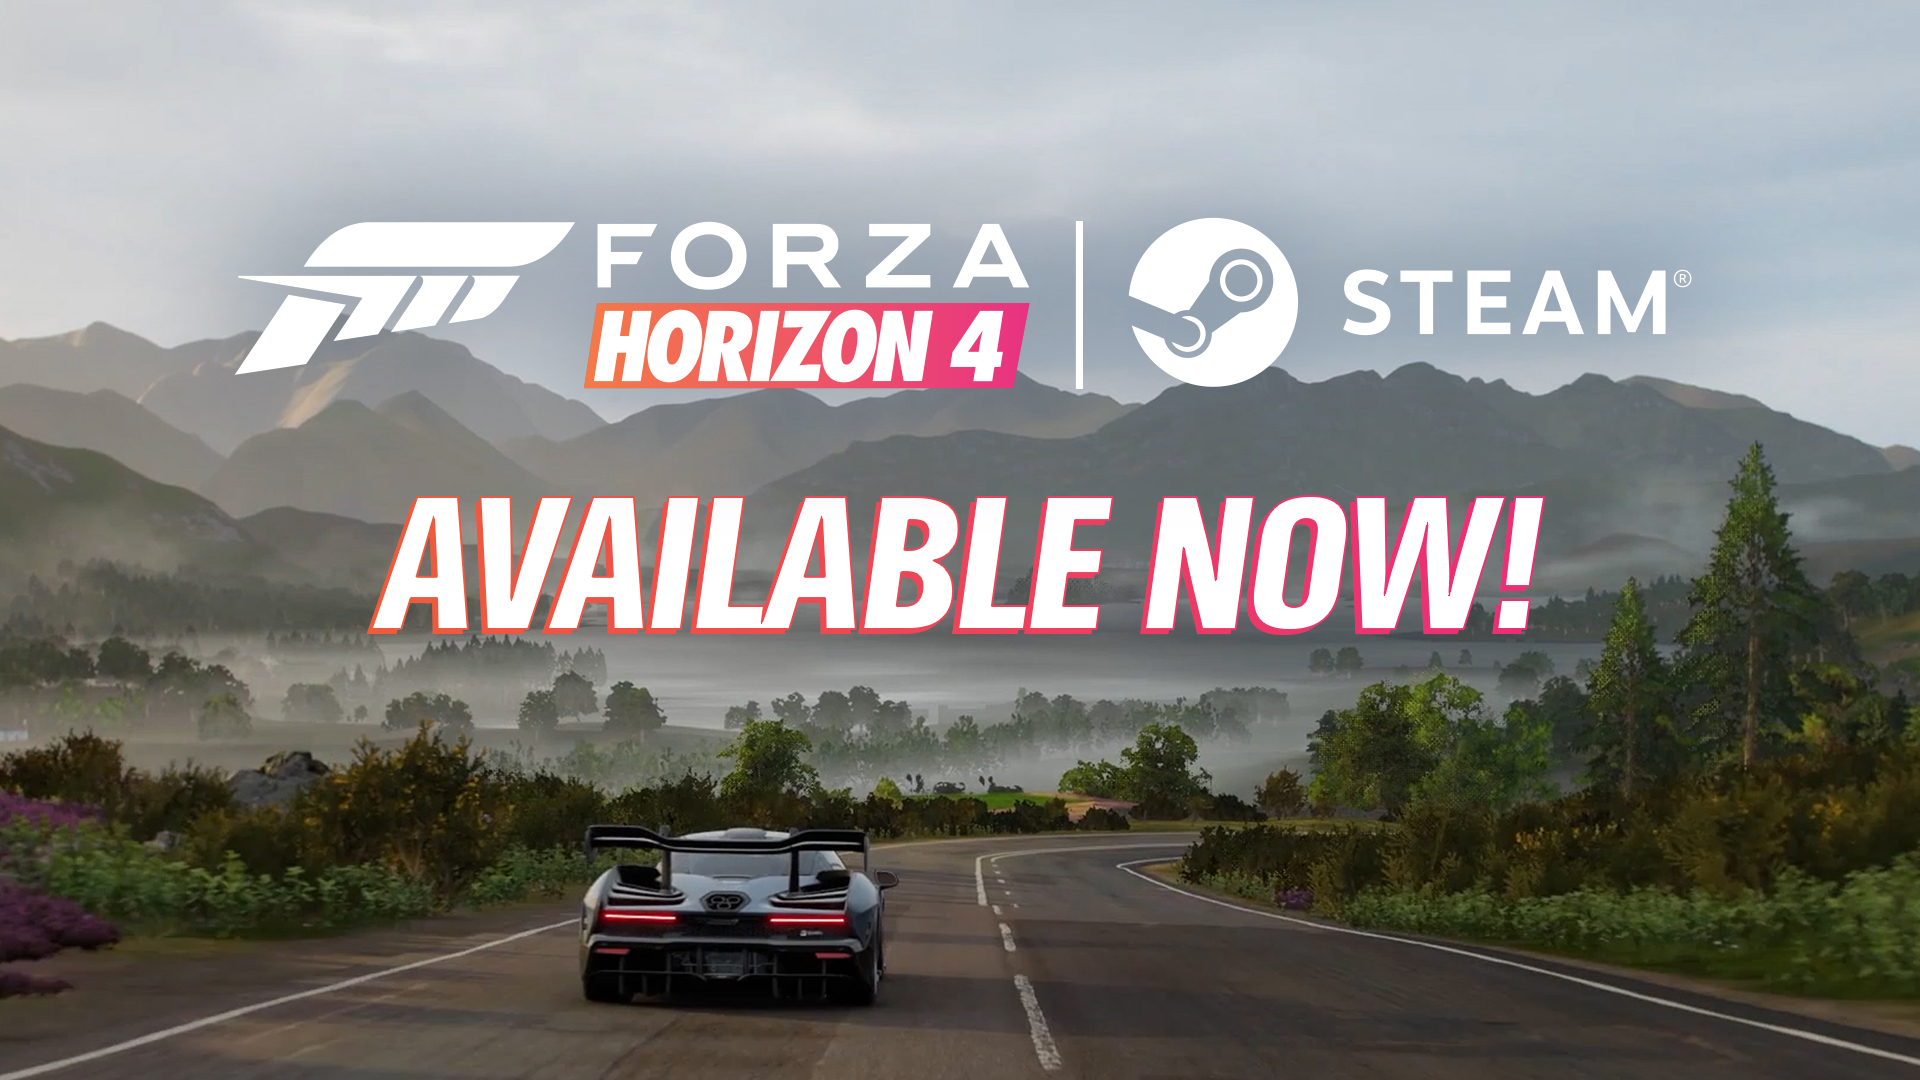 Forza Horizon 4: Fortune Island on Steam